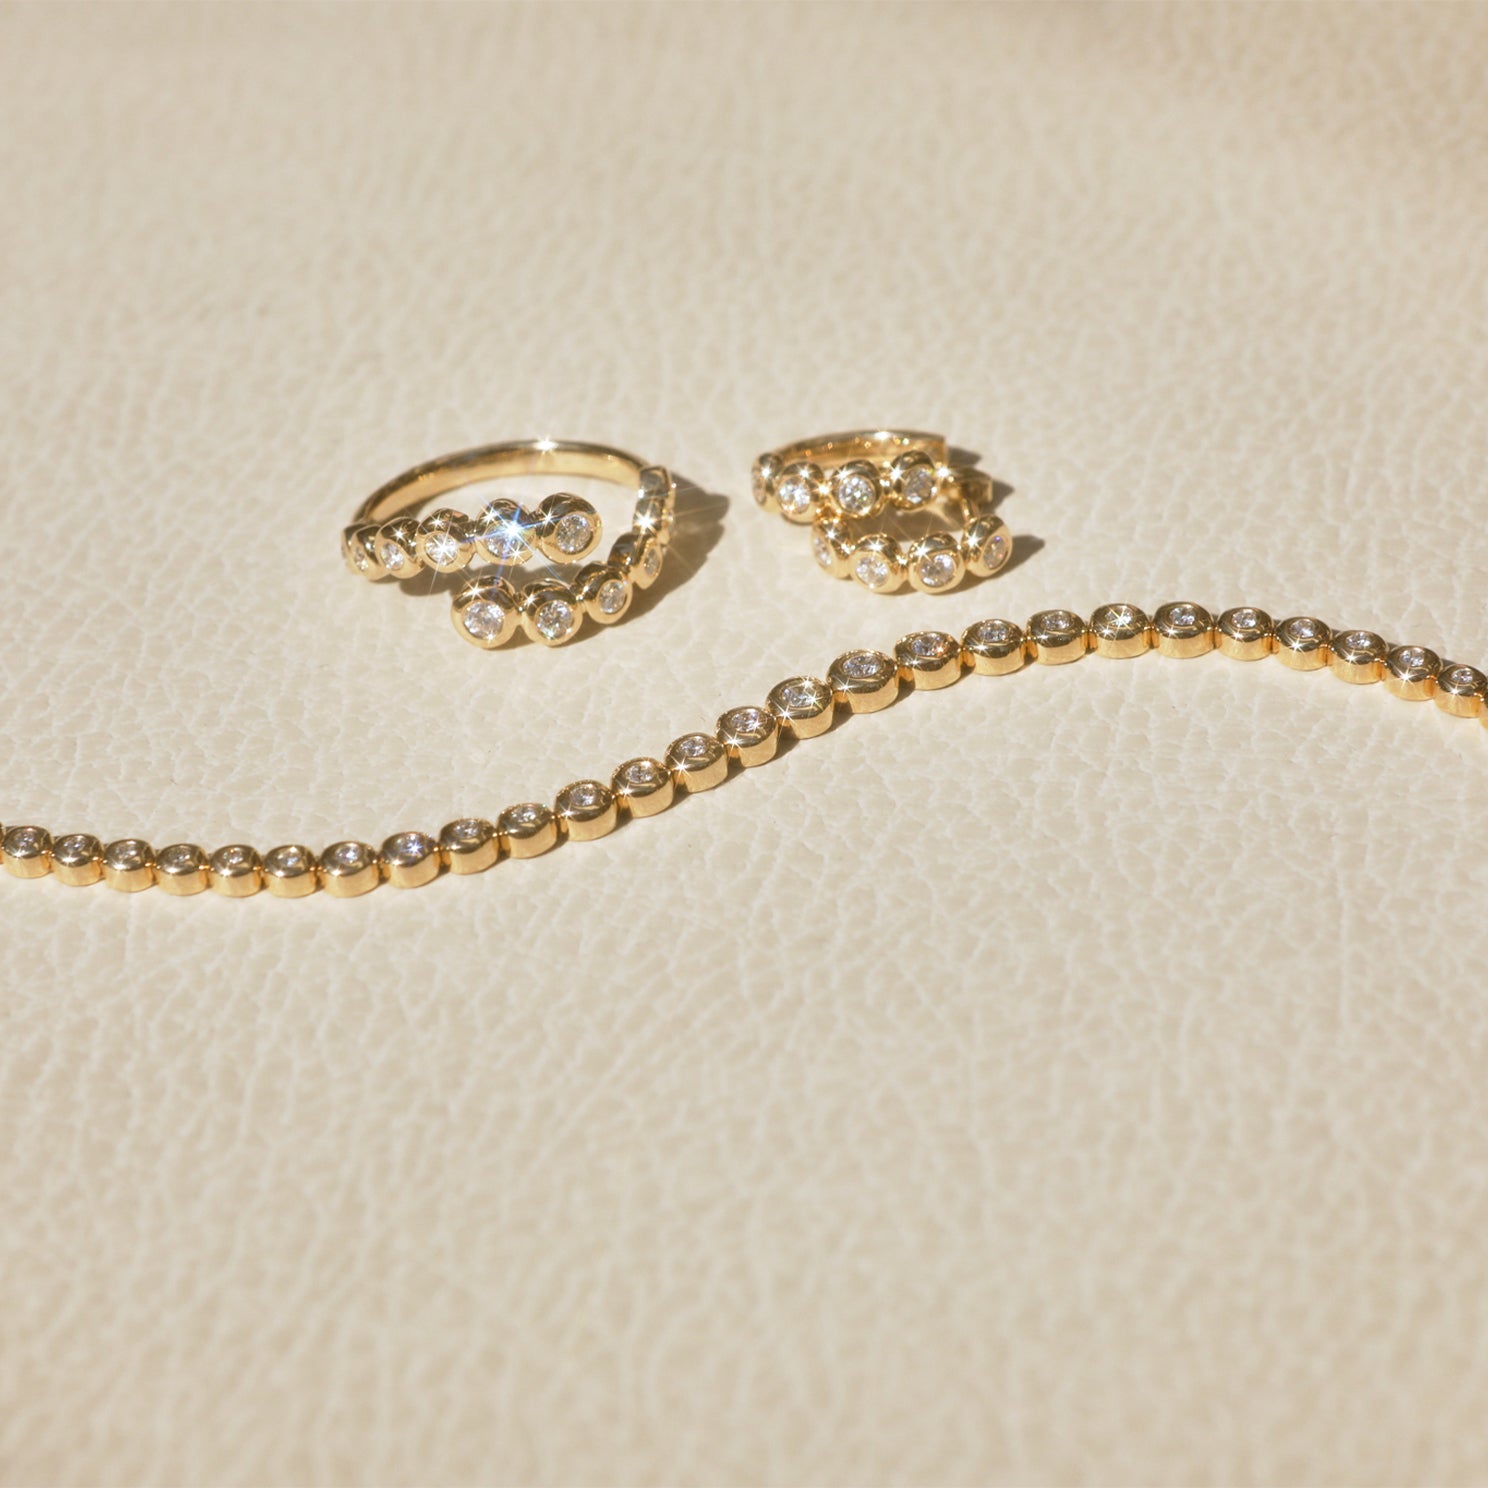 Graduated Diamond Pillow Wrap Ring in 14k yellow gold next to diamond pillow huggie earrings and diamond pillow bracelet